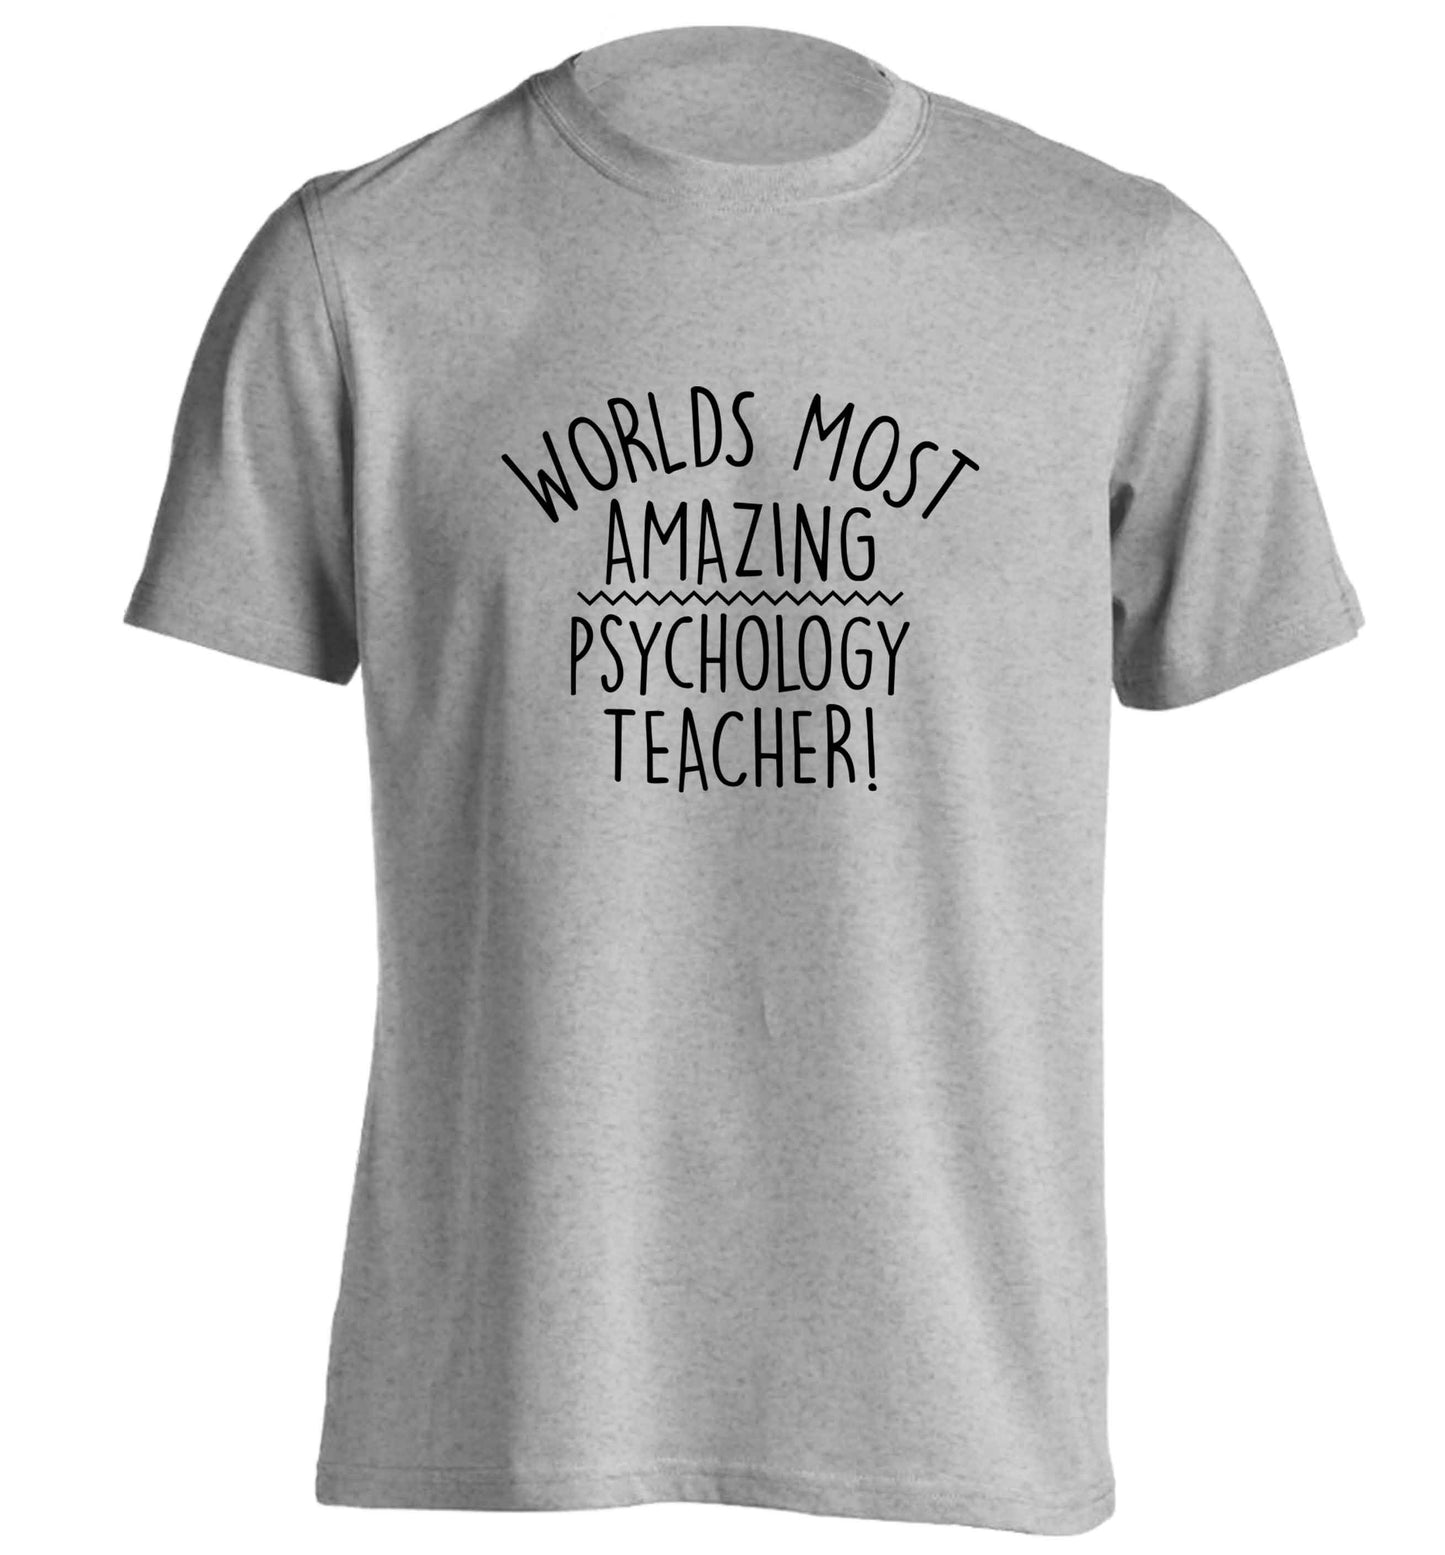 Worlds most amazing psychology teacher adults unisex grey Tshirt 2XL